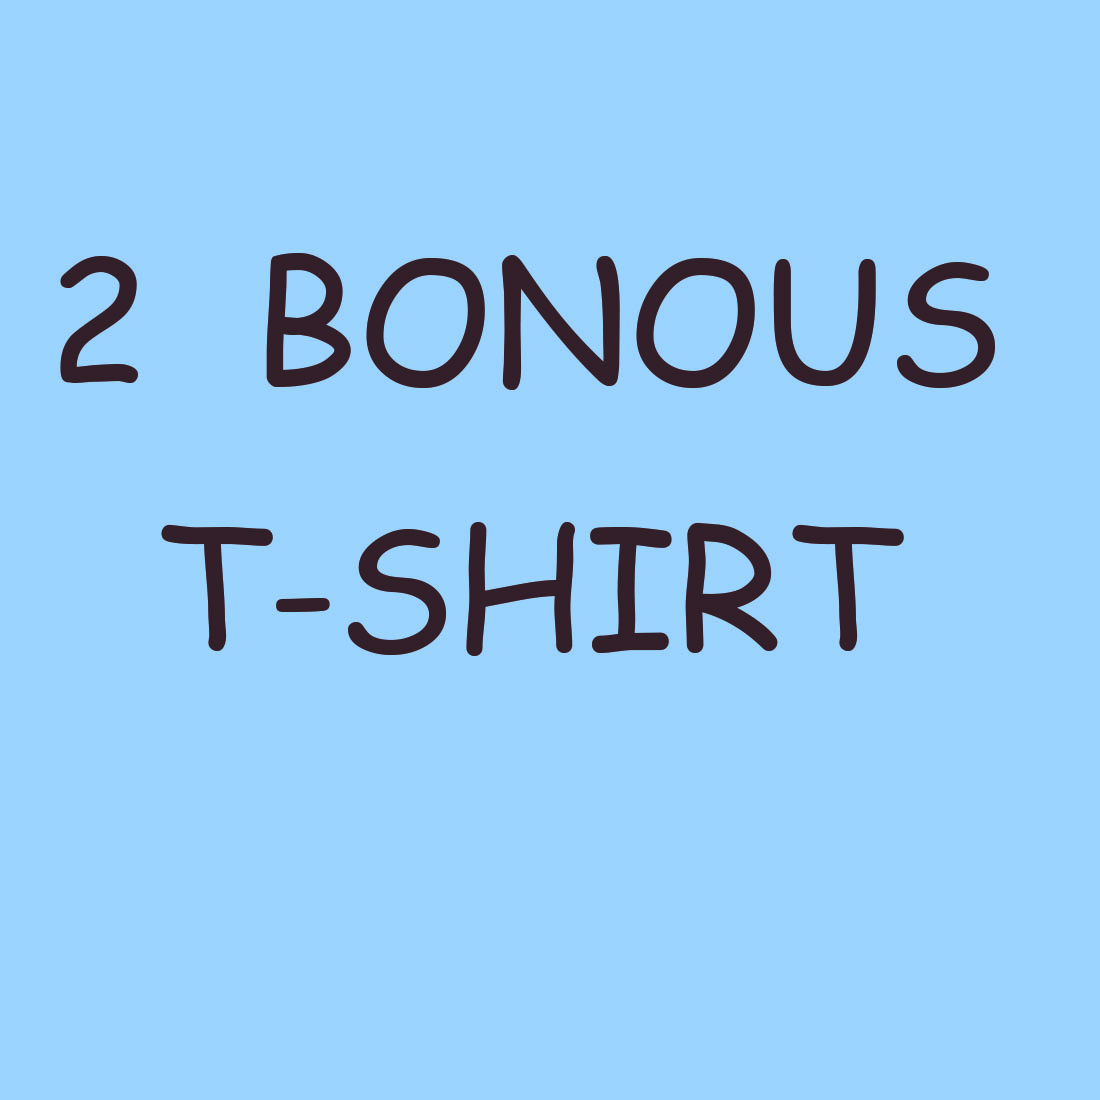 You will get 2 t-shirt as a bonus.